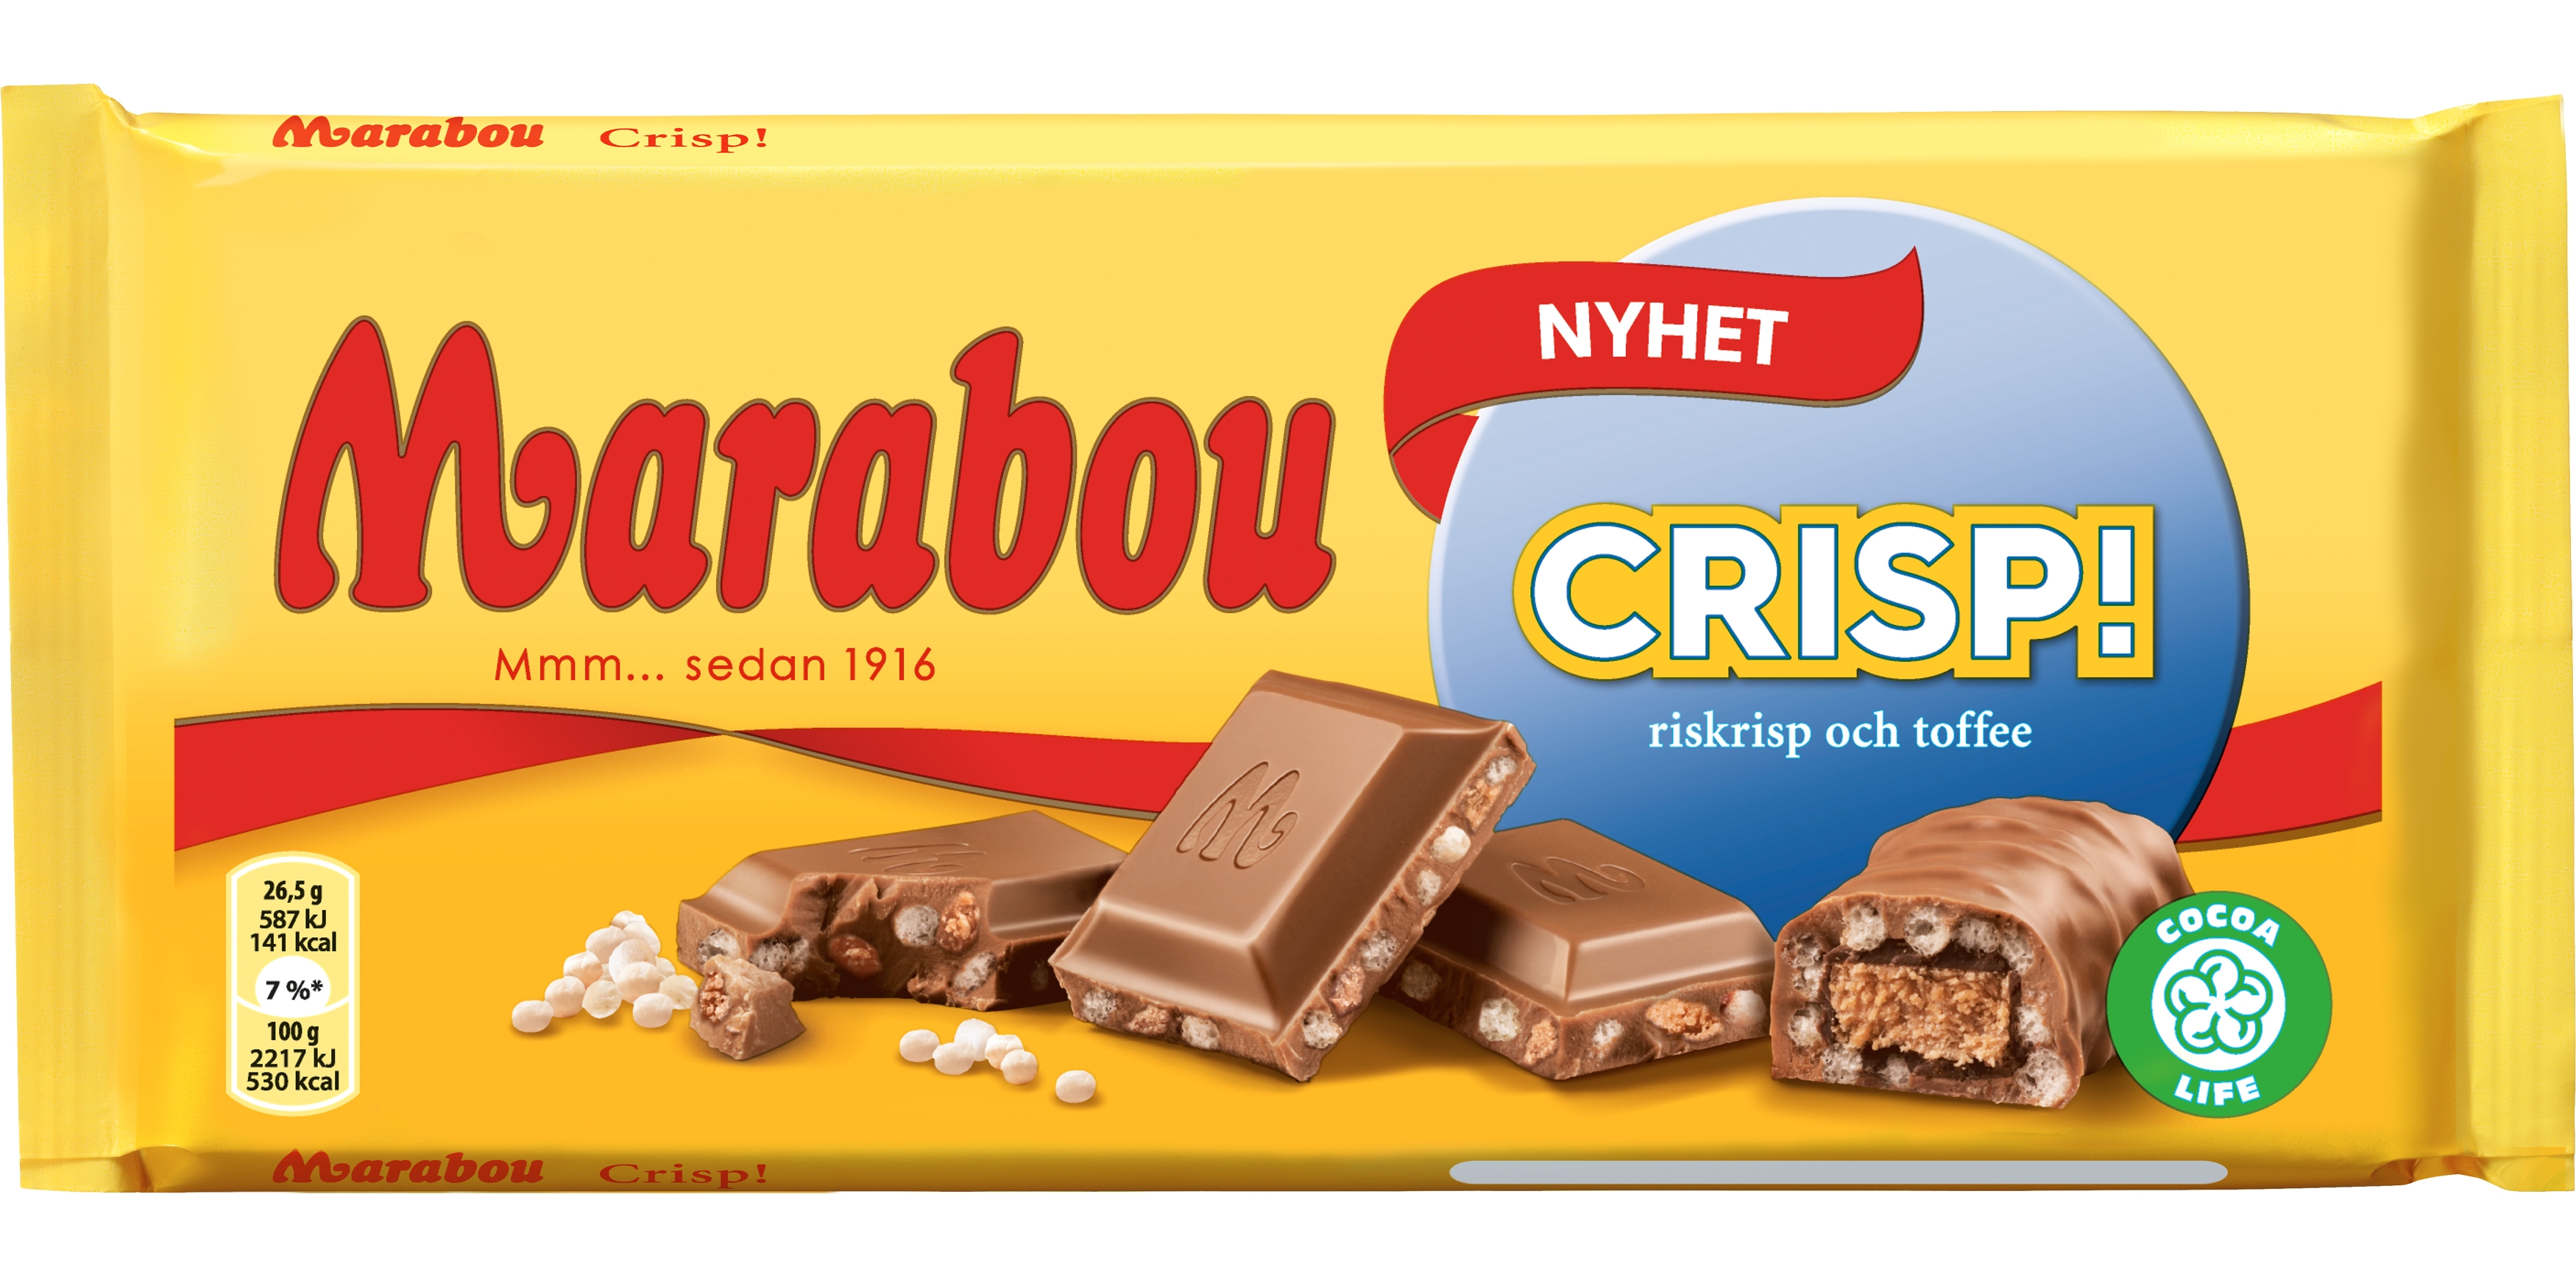 marabou crisp wrapper cu 185g wrapper front sweden e1533202030115